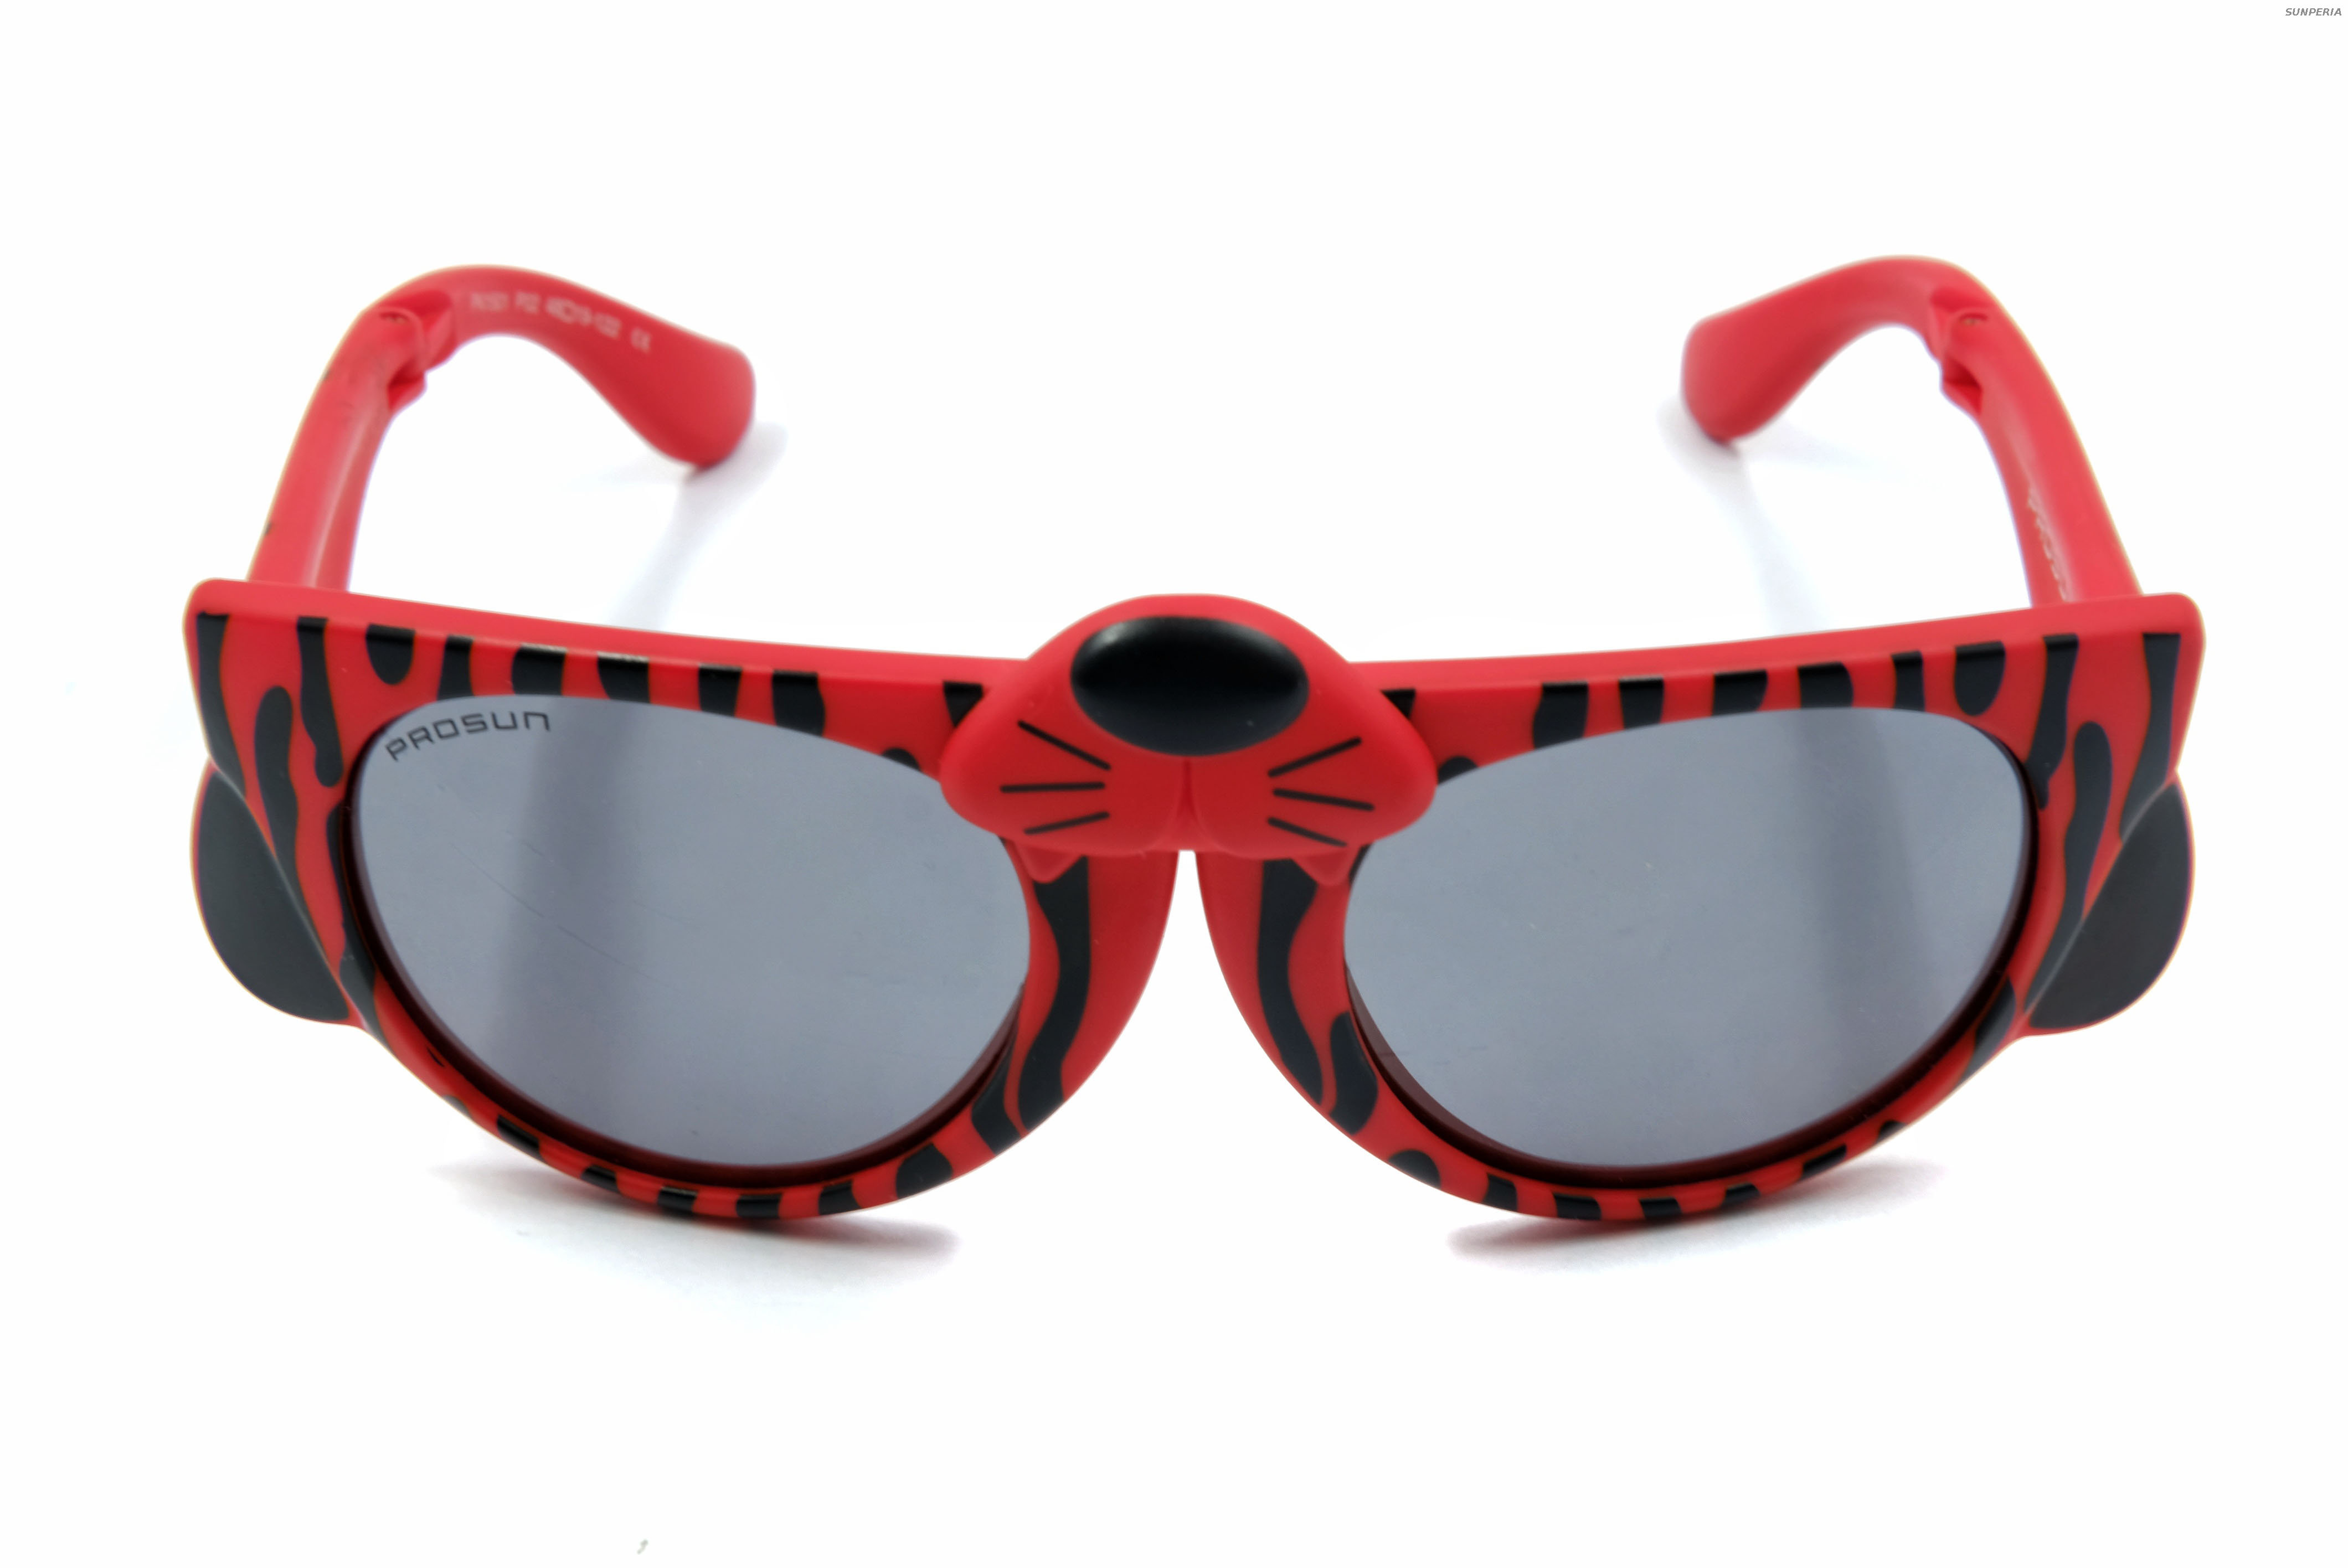 Gensun Eyewear Kids Eyeglasses Boy Girls Gafas de sol Lentes polarizadas Proteger los ojos